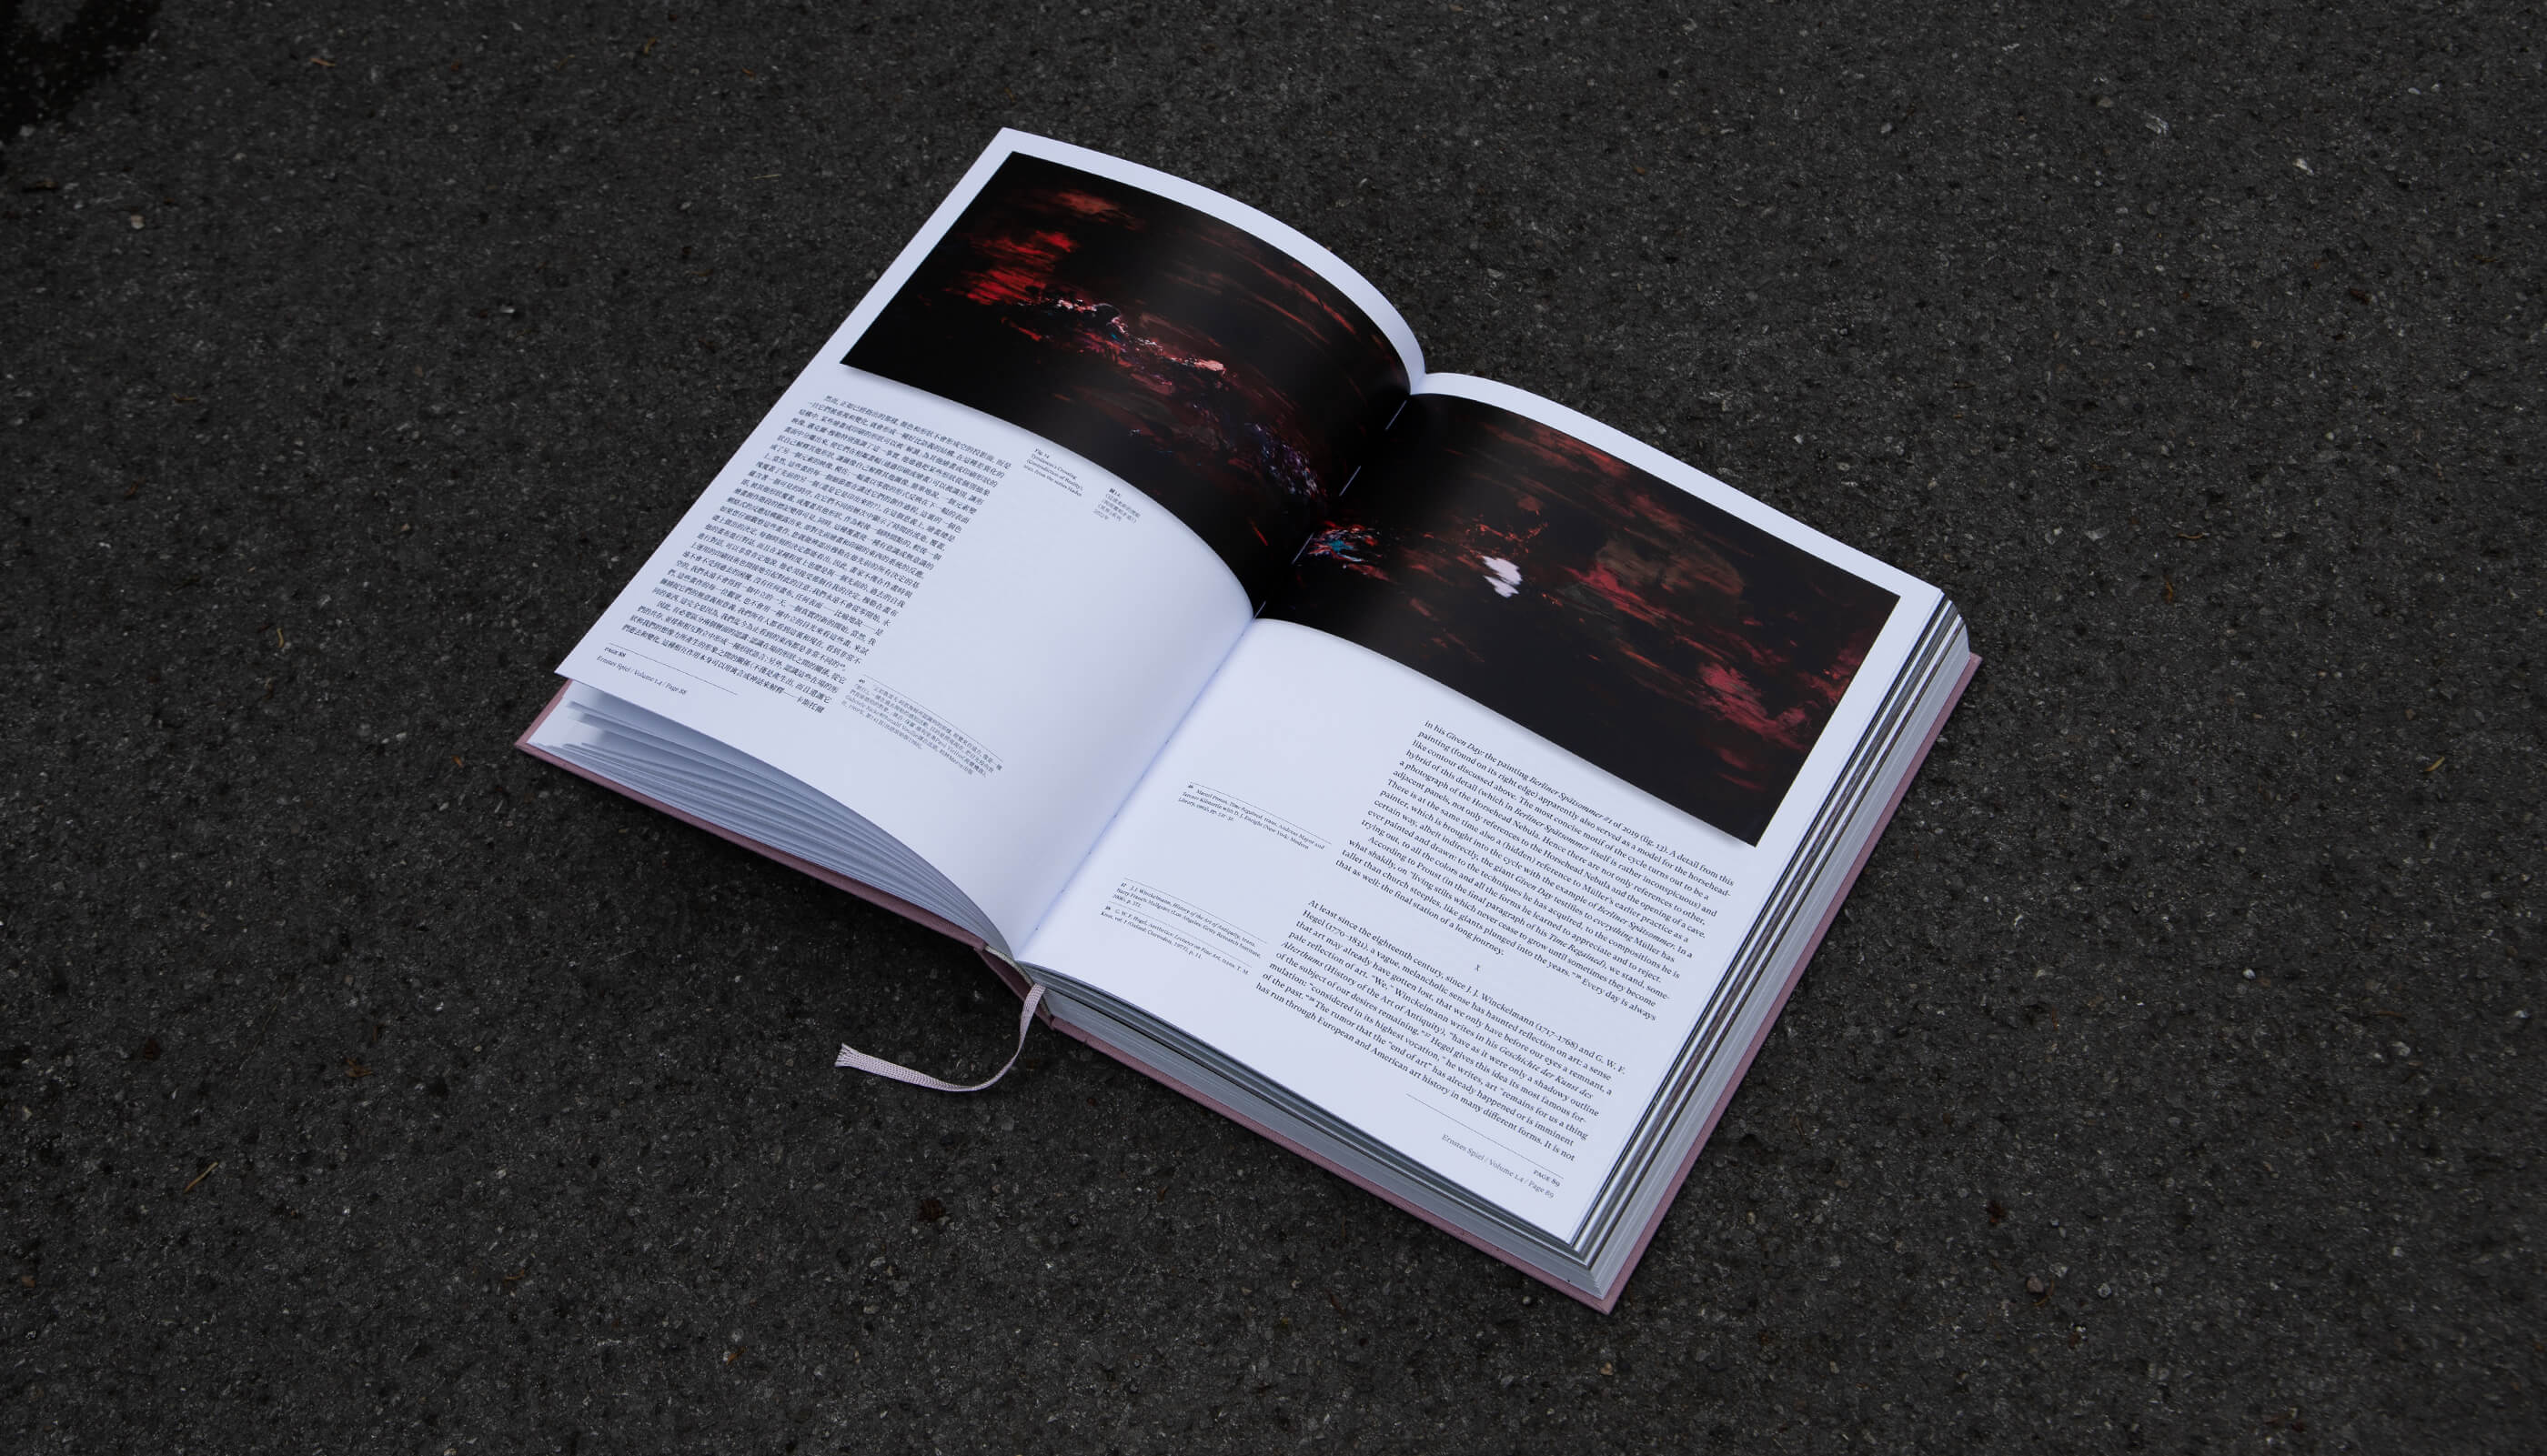 Studio Michael Müller, Deutscher Kunstverlag, De Gruyter, Catalogue Raisonné, Der geschenkte Tag, Publikation, Editorial Design